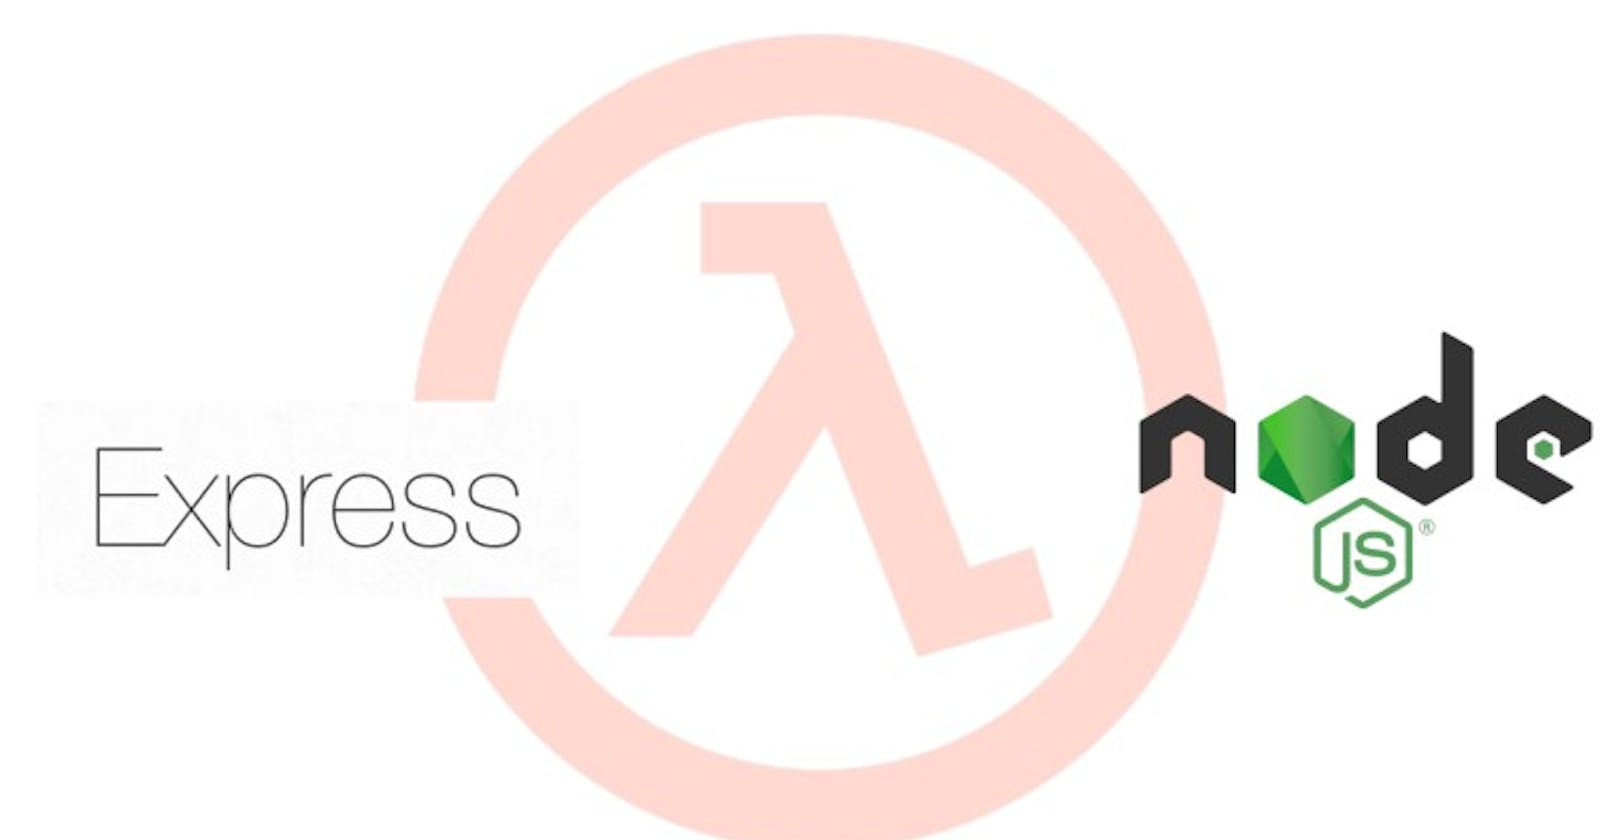 NodeJS Express and AWS Lambda Functions